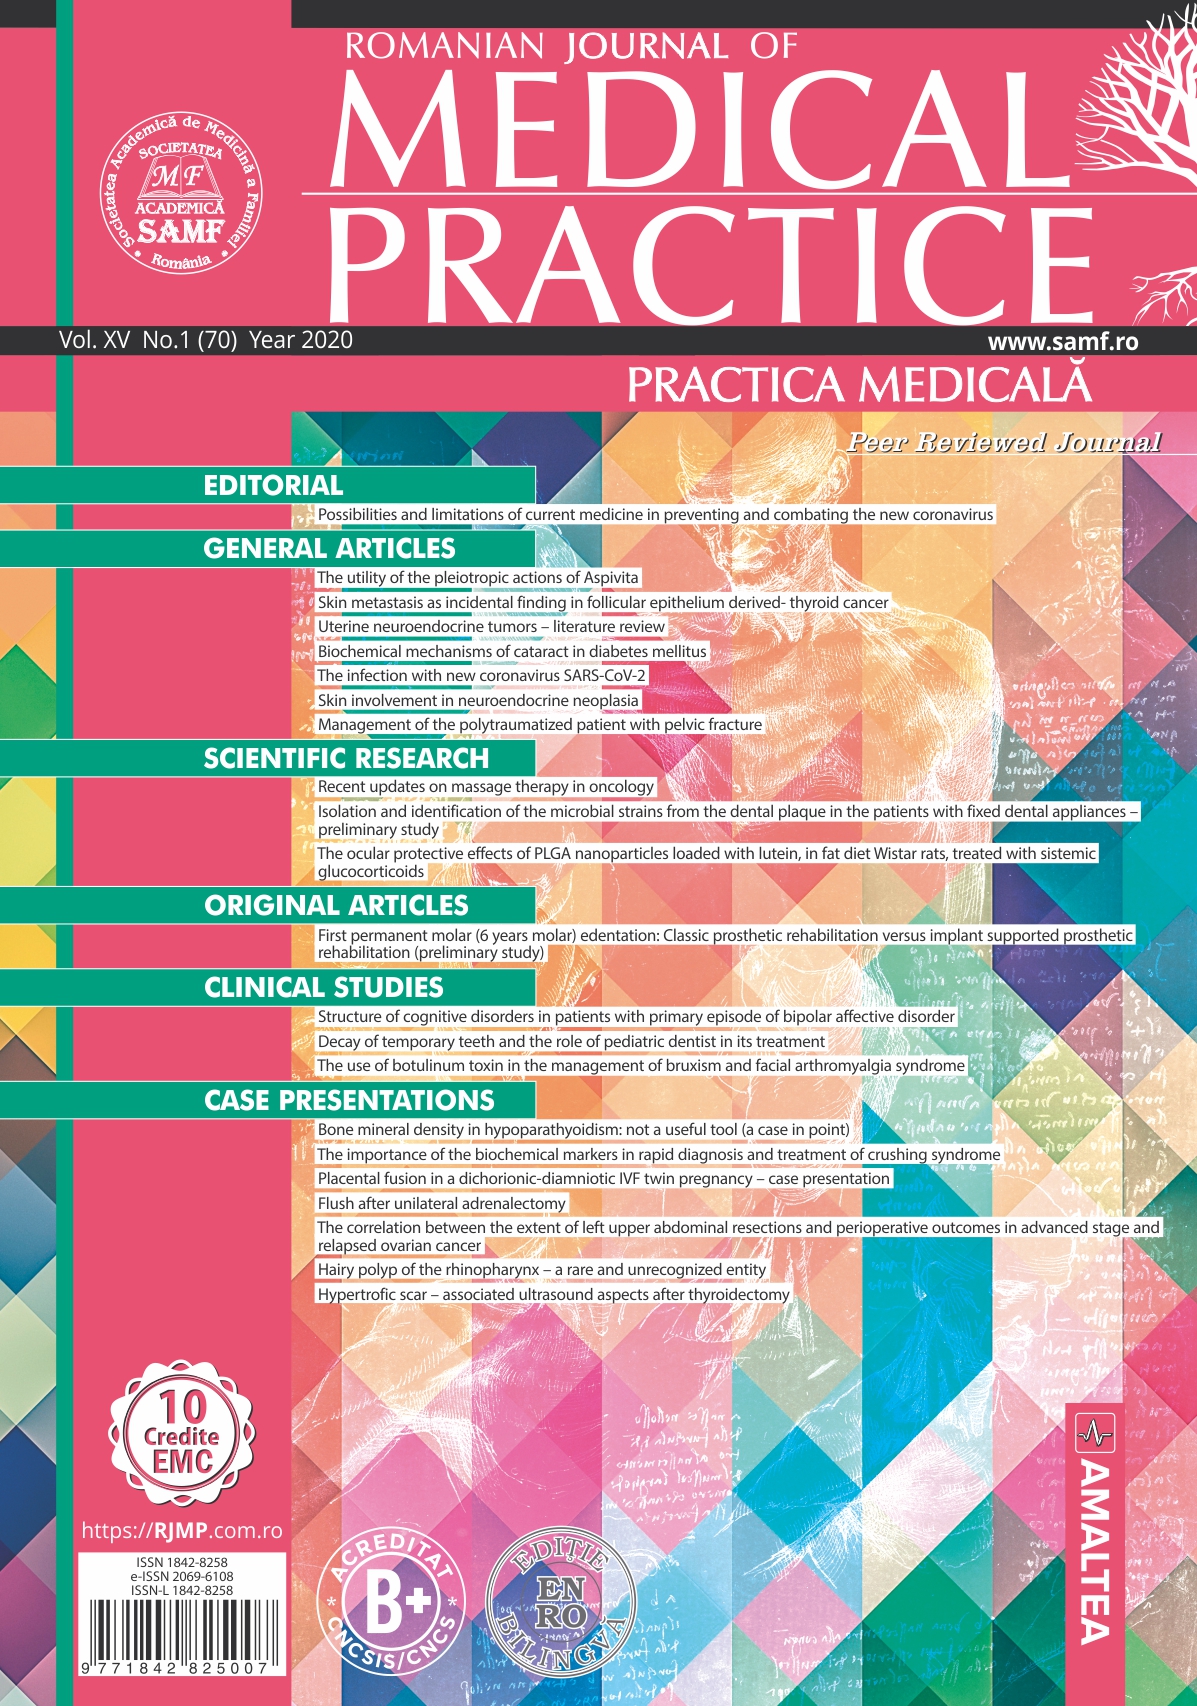 Romanian Journal of Medical Practice | Practica Medicala, Vol. XV, No. 1 (70), 2020